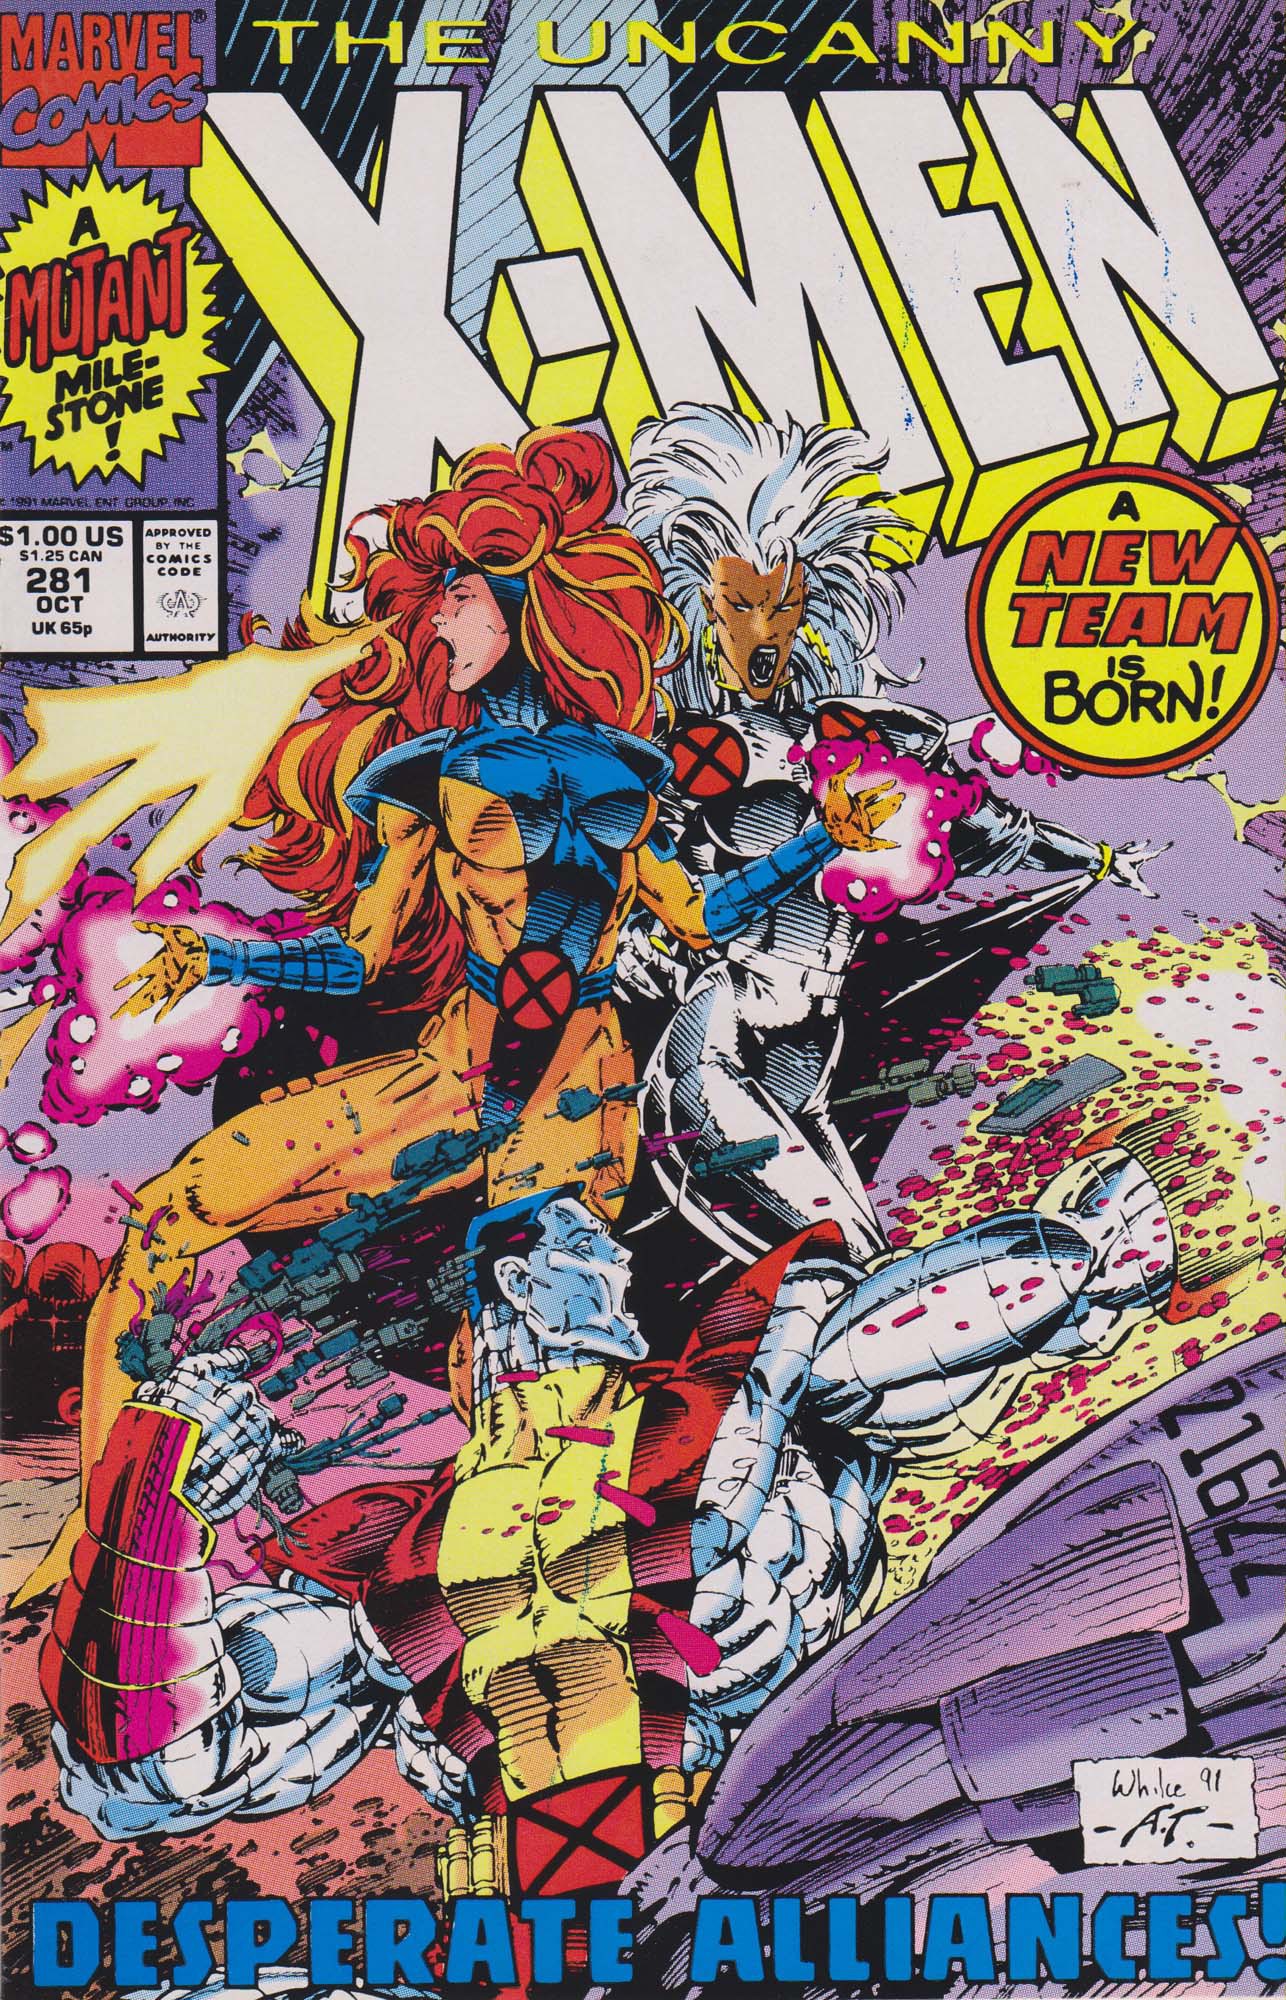 THE UNCANNY XMEN key issues 1990s Marvel 1980s